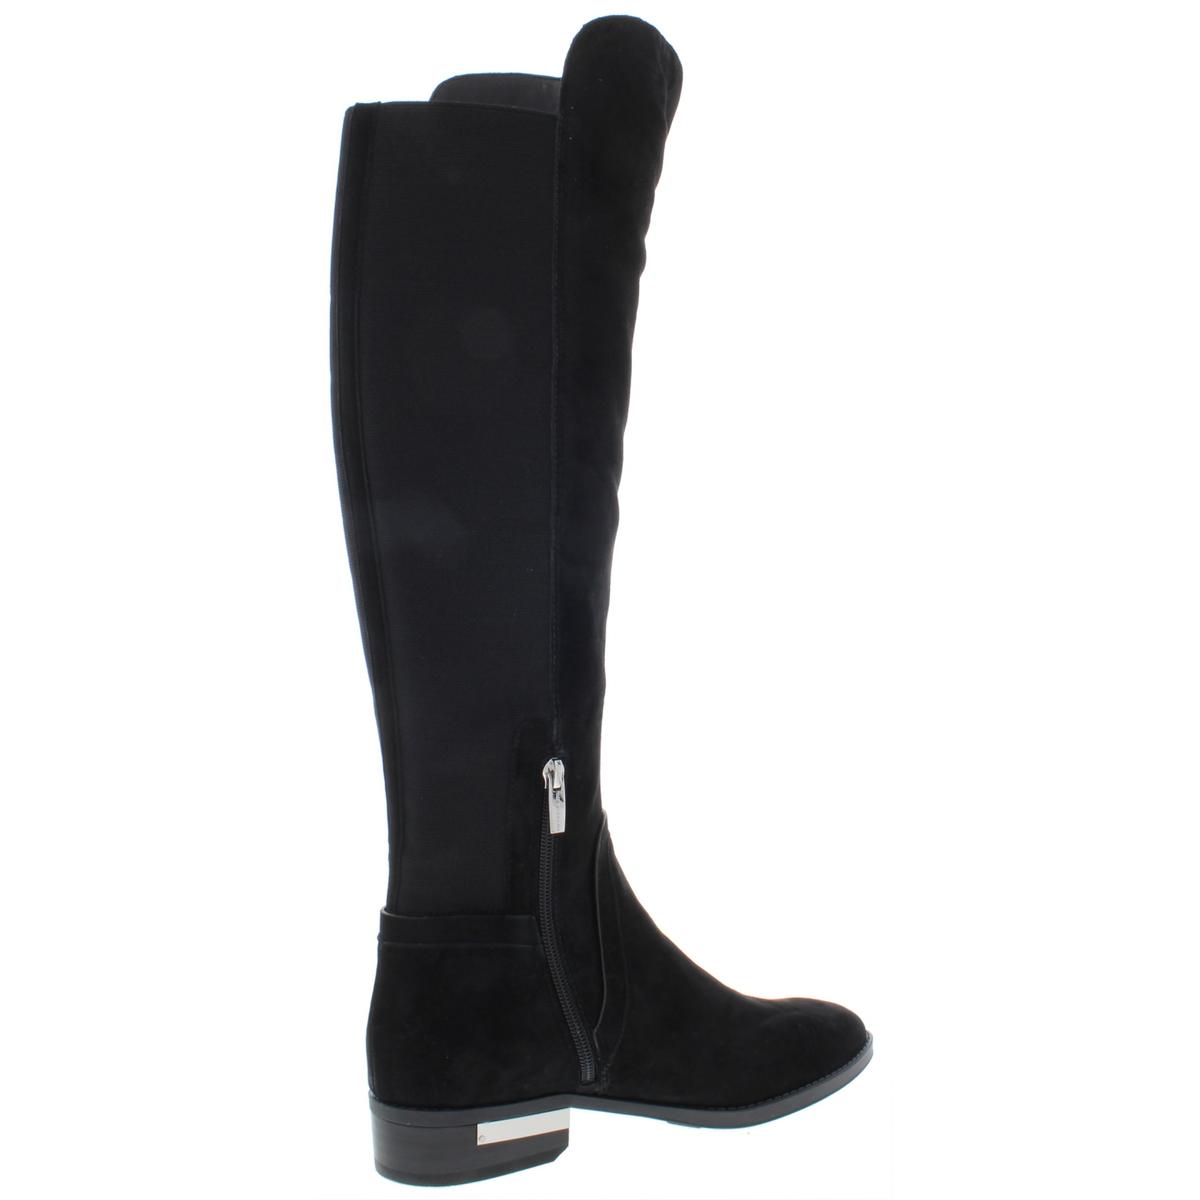 Giani Bernini Womens Cathrin Leather Fashion Over-The-Knee Boots Shoes BHFO 2191